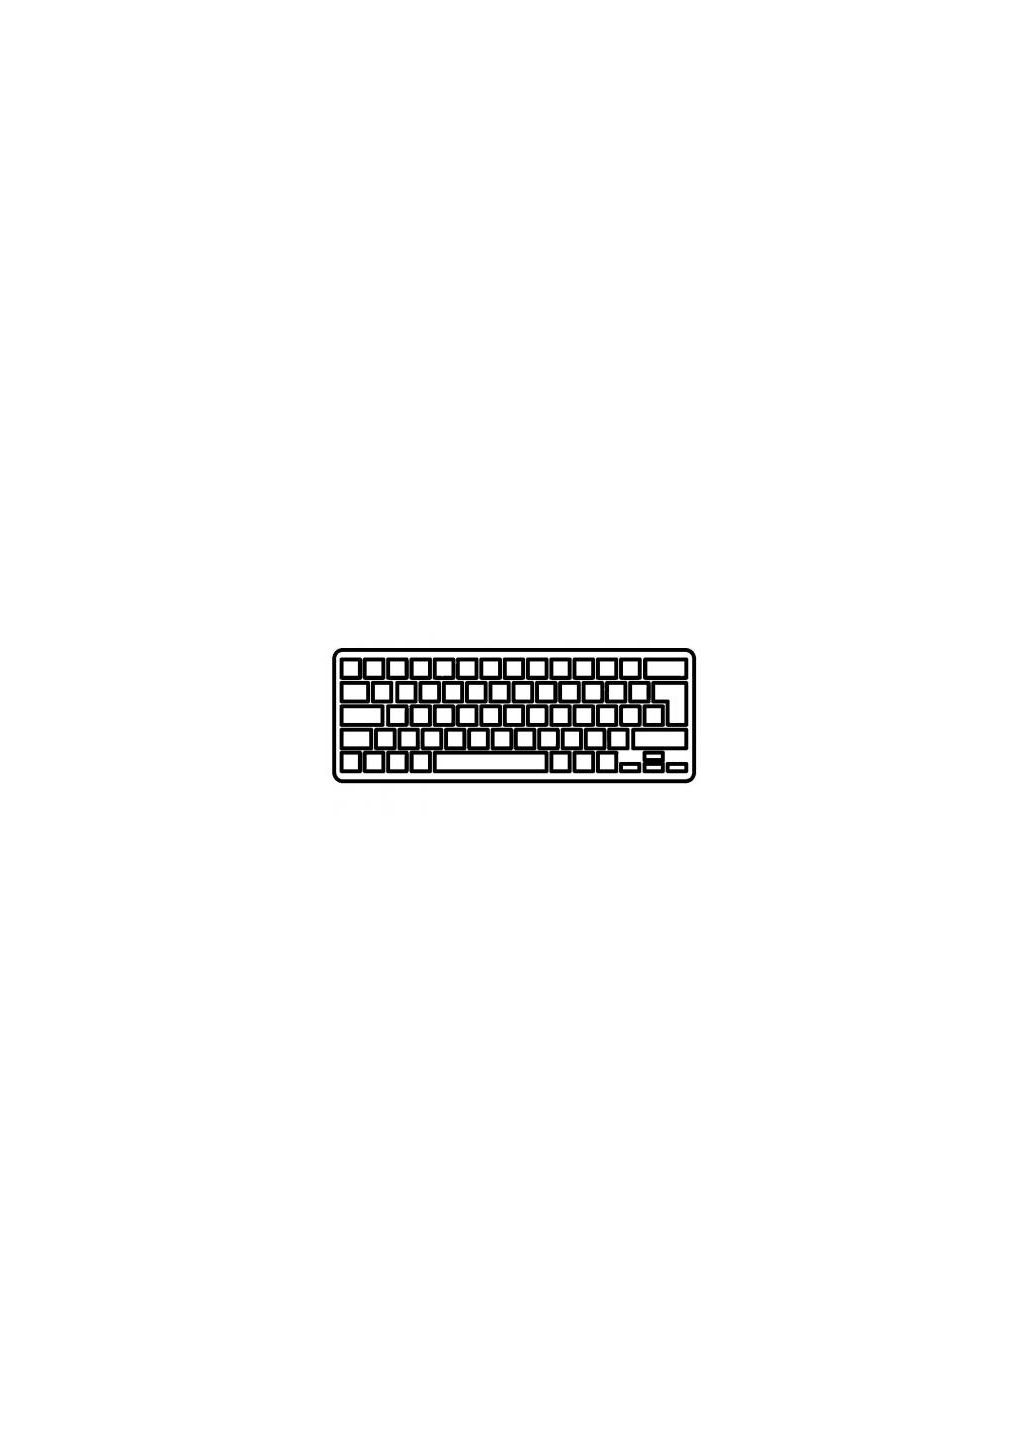 Клавиатура ноутбука (A43132) HP pavilion dv3500 бронзовая ru (276707635)